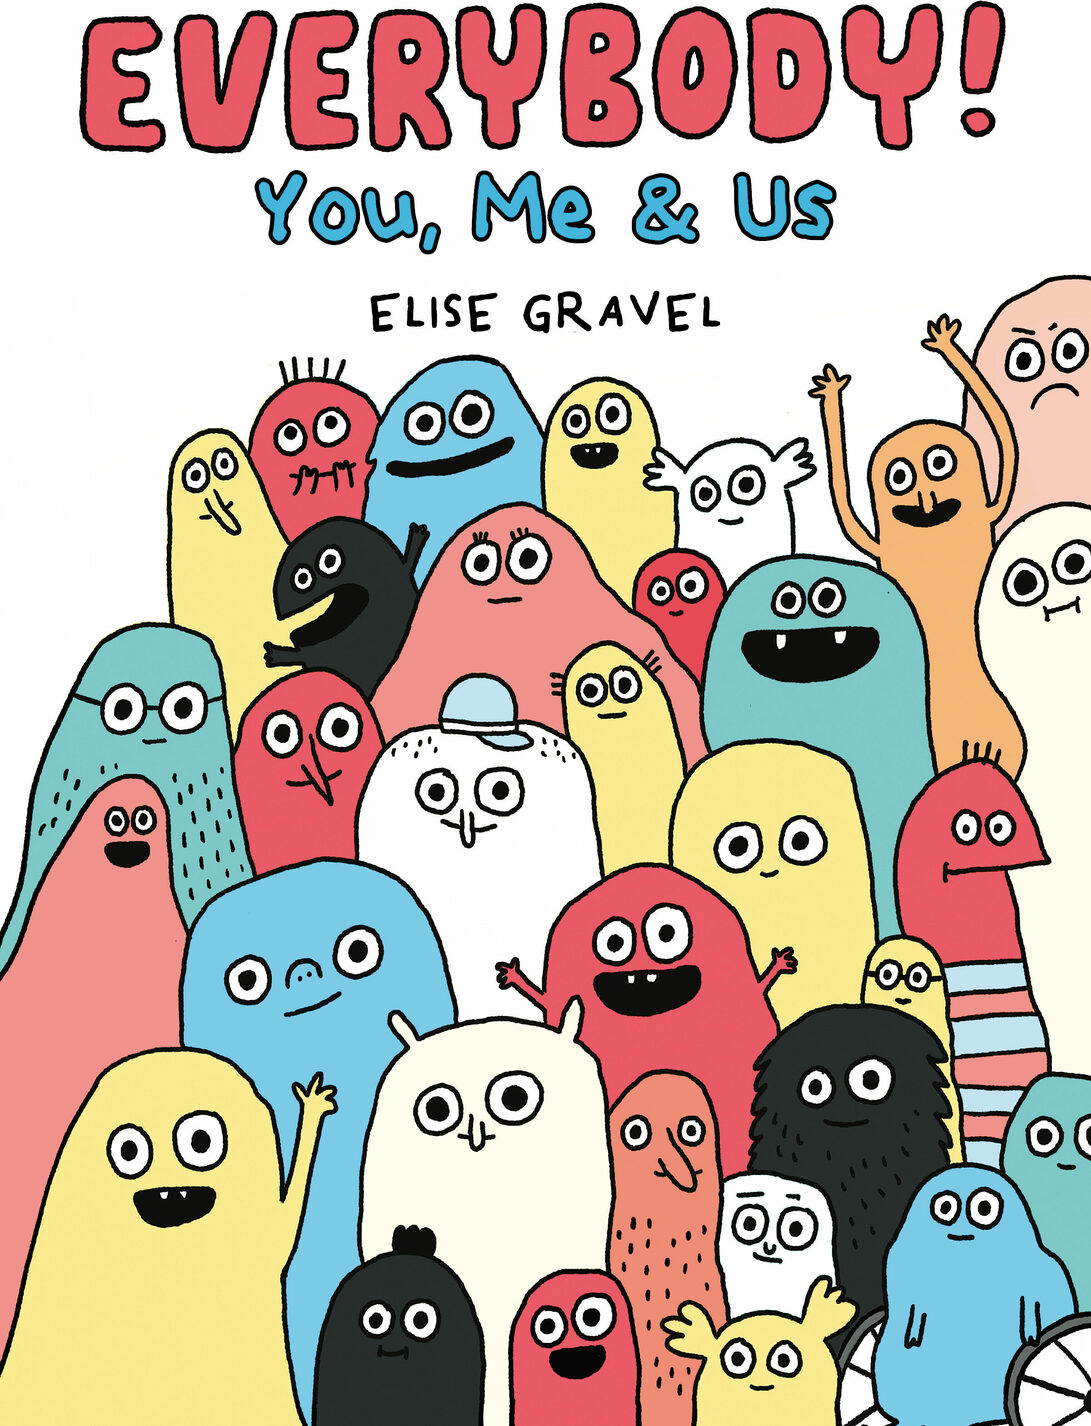 Everybody!: You, Me & Us